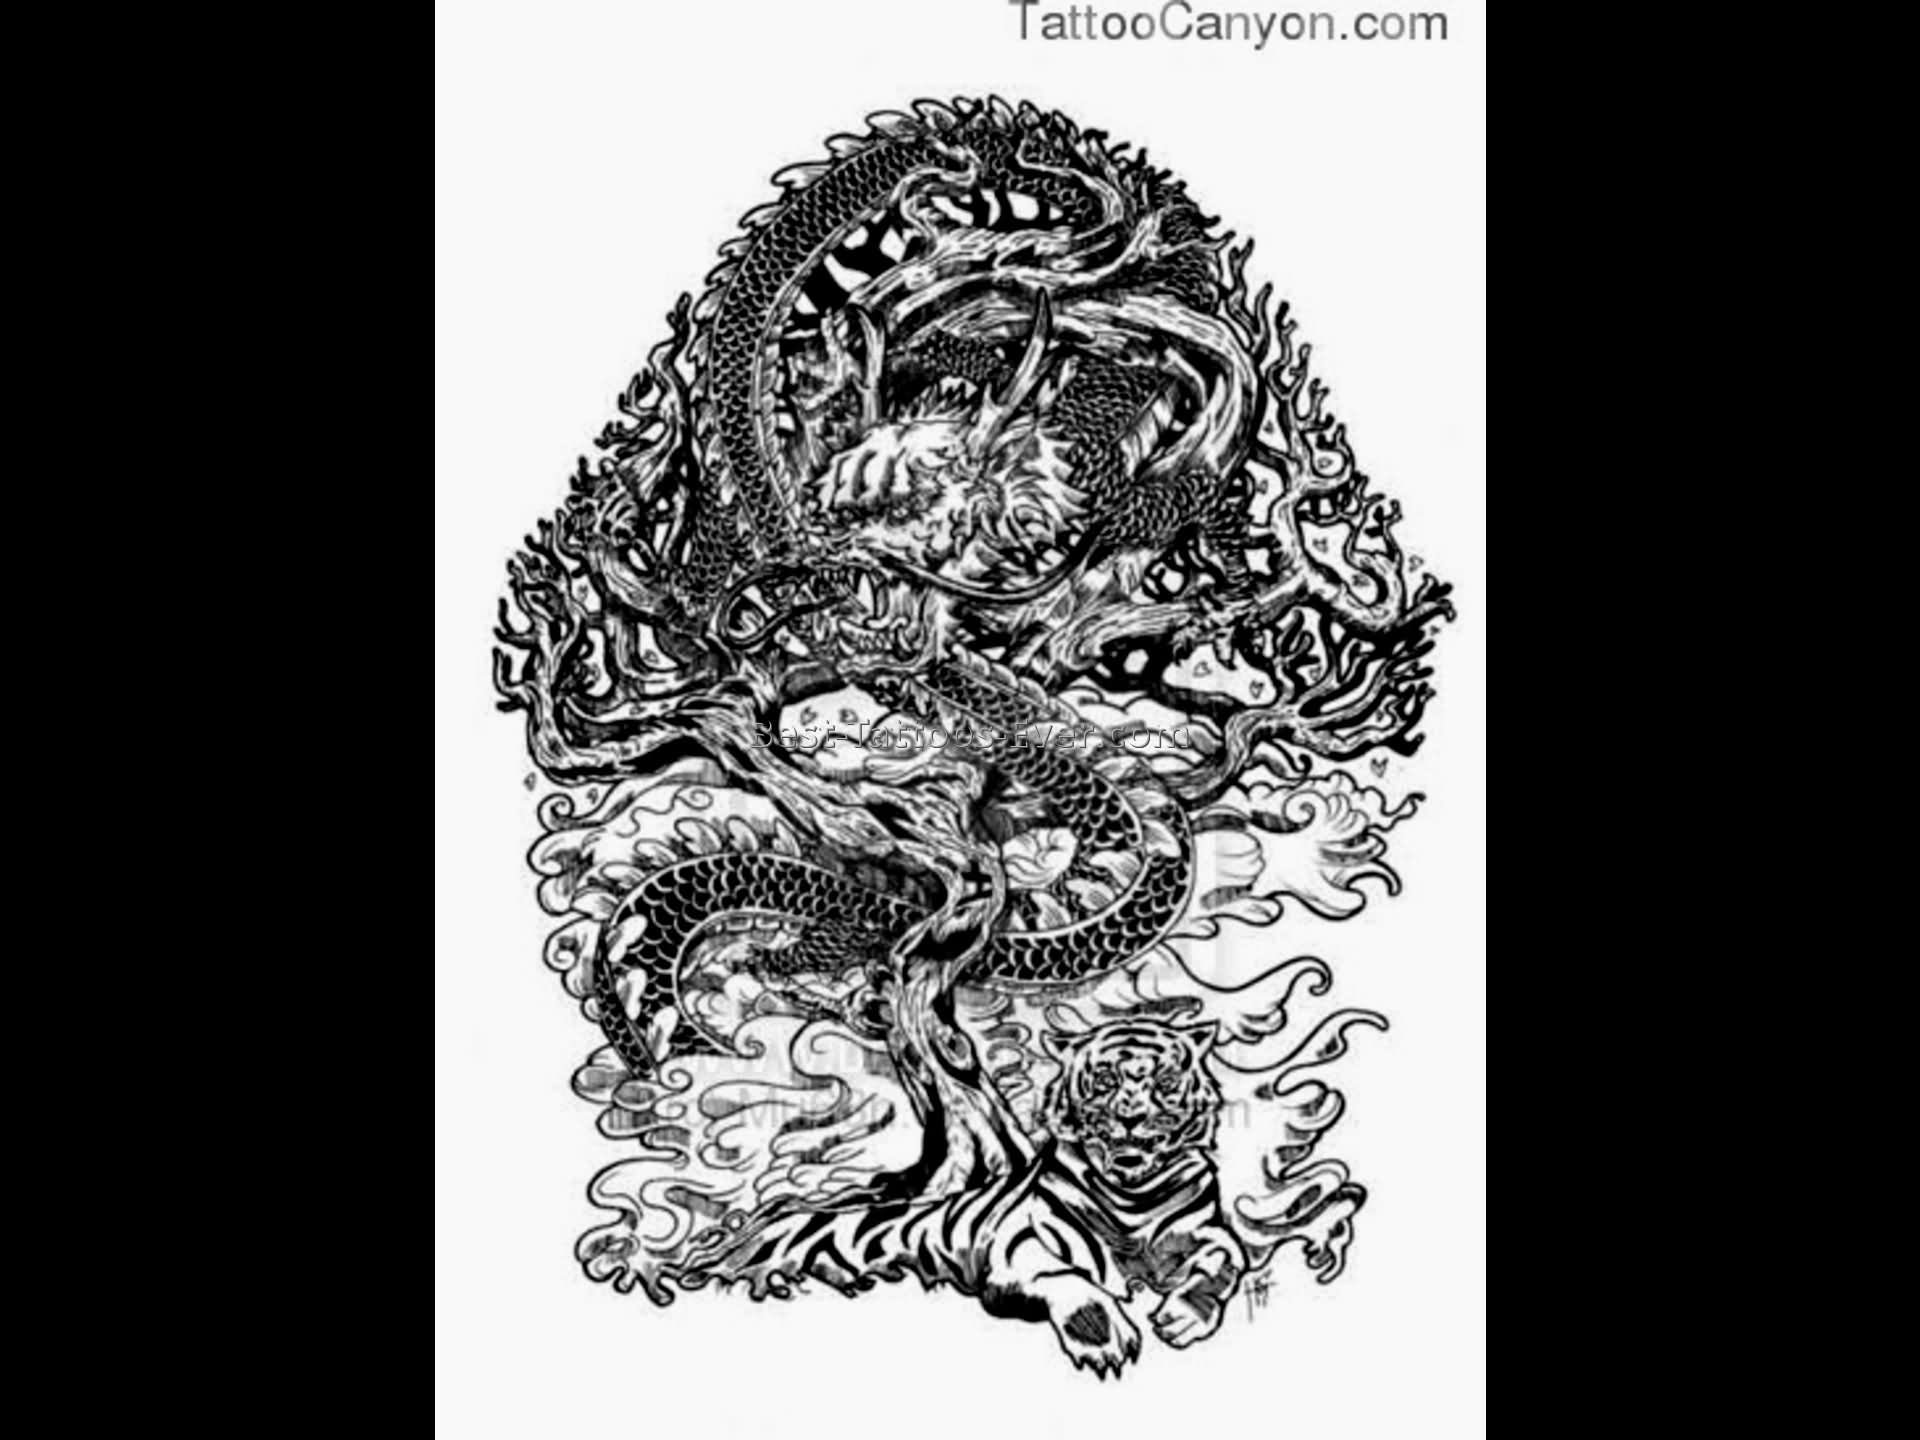 Black & White Tiger and Dragon Tattoo Design